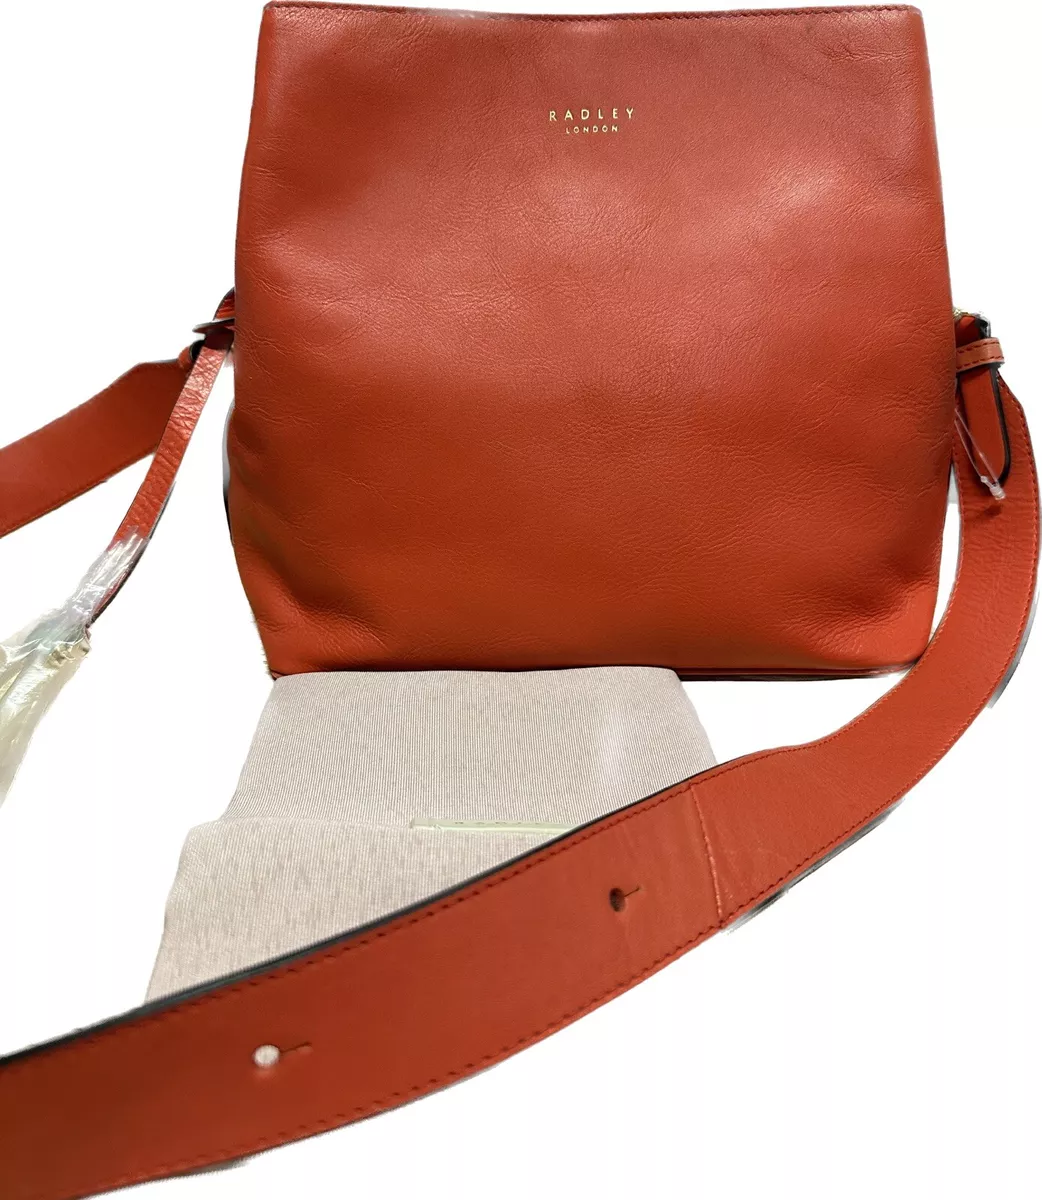 Radley London purse with flapover, Colour- Tan, Leather Material, Signature  Dog | eBay